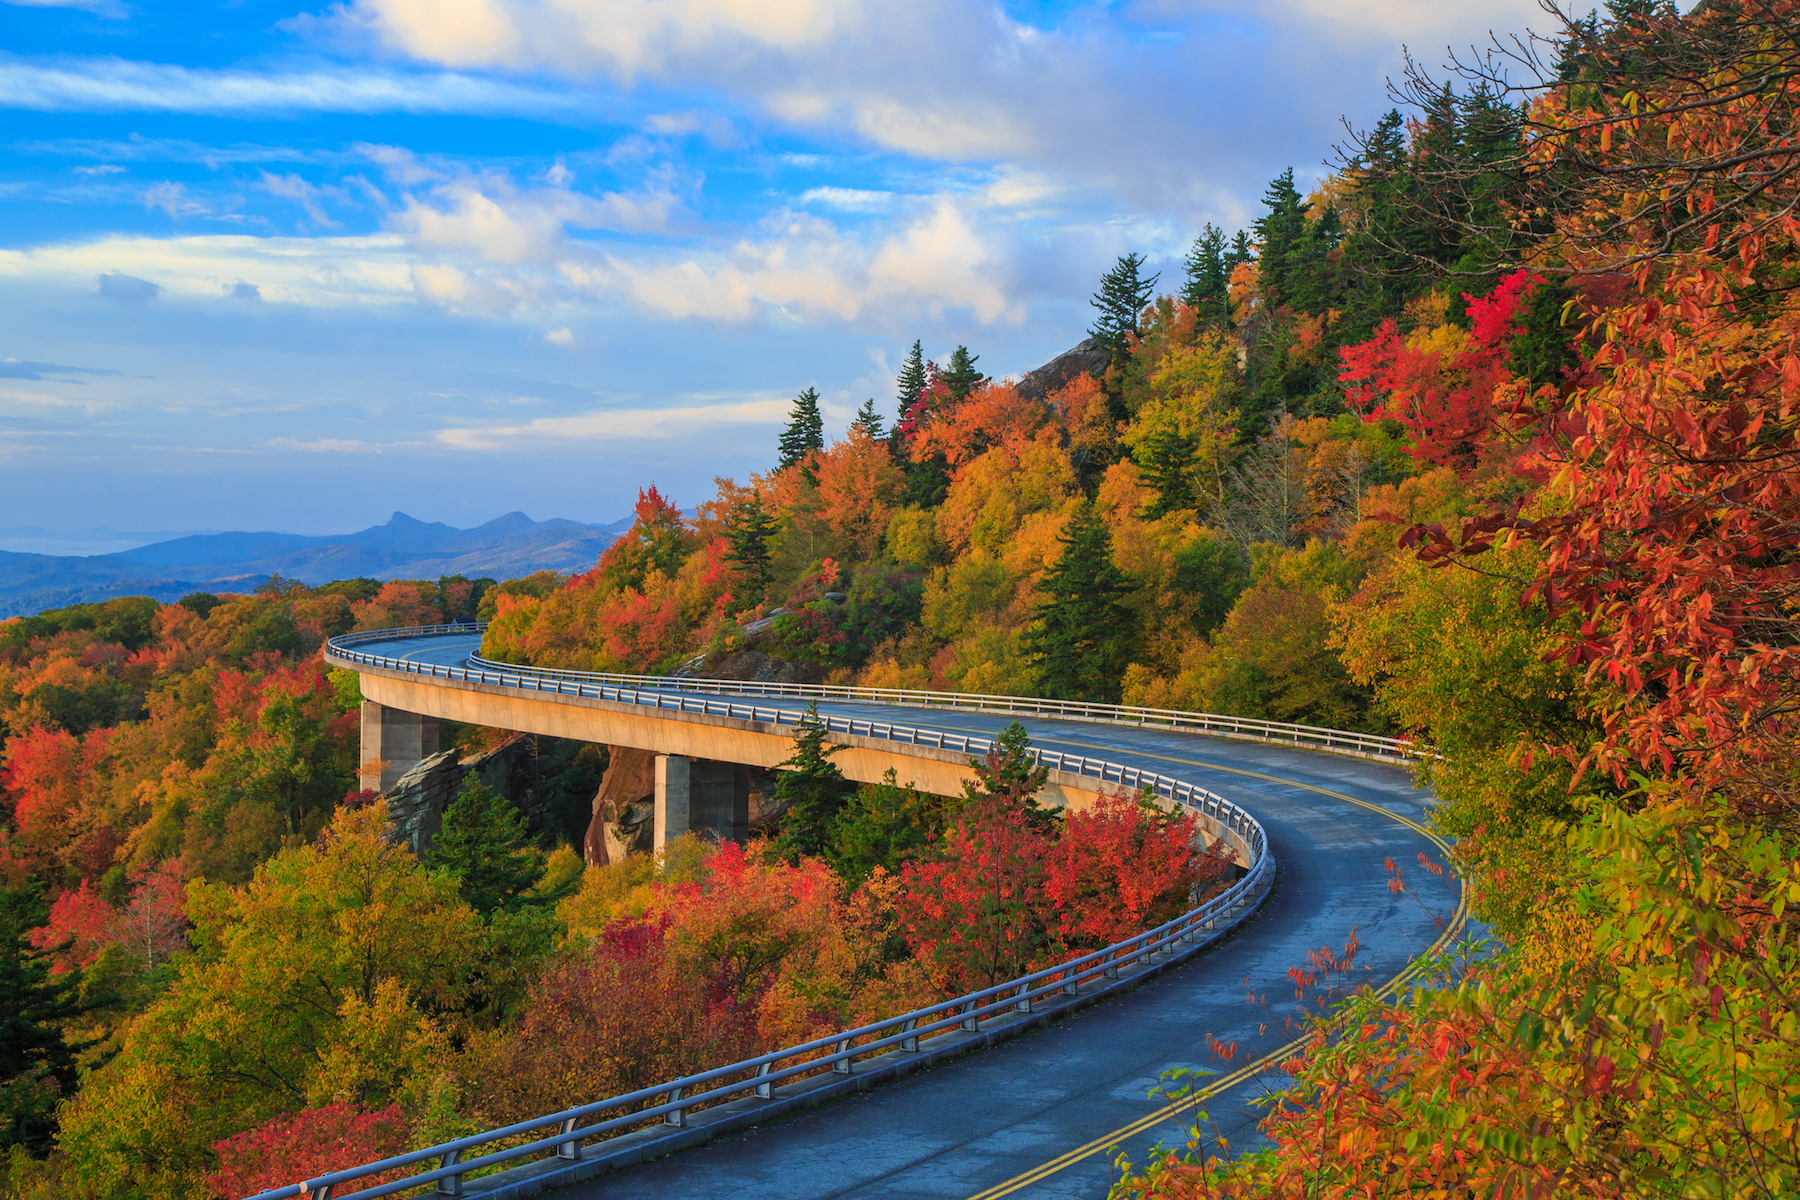 Linn Cove Viaduct on the Blue Ridge parkway in the fall season: Fall colors near Chimney Rock.